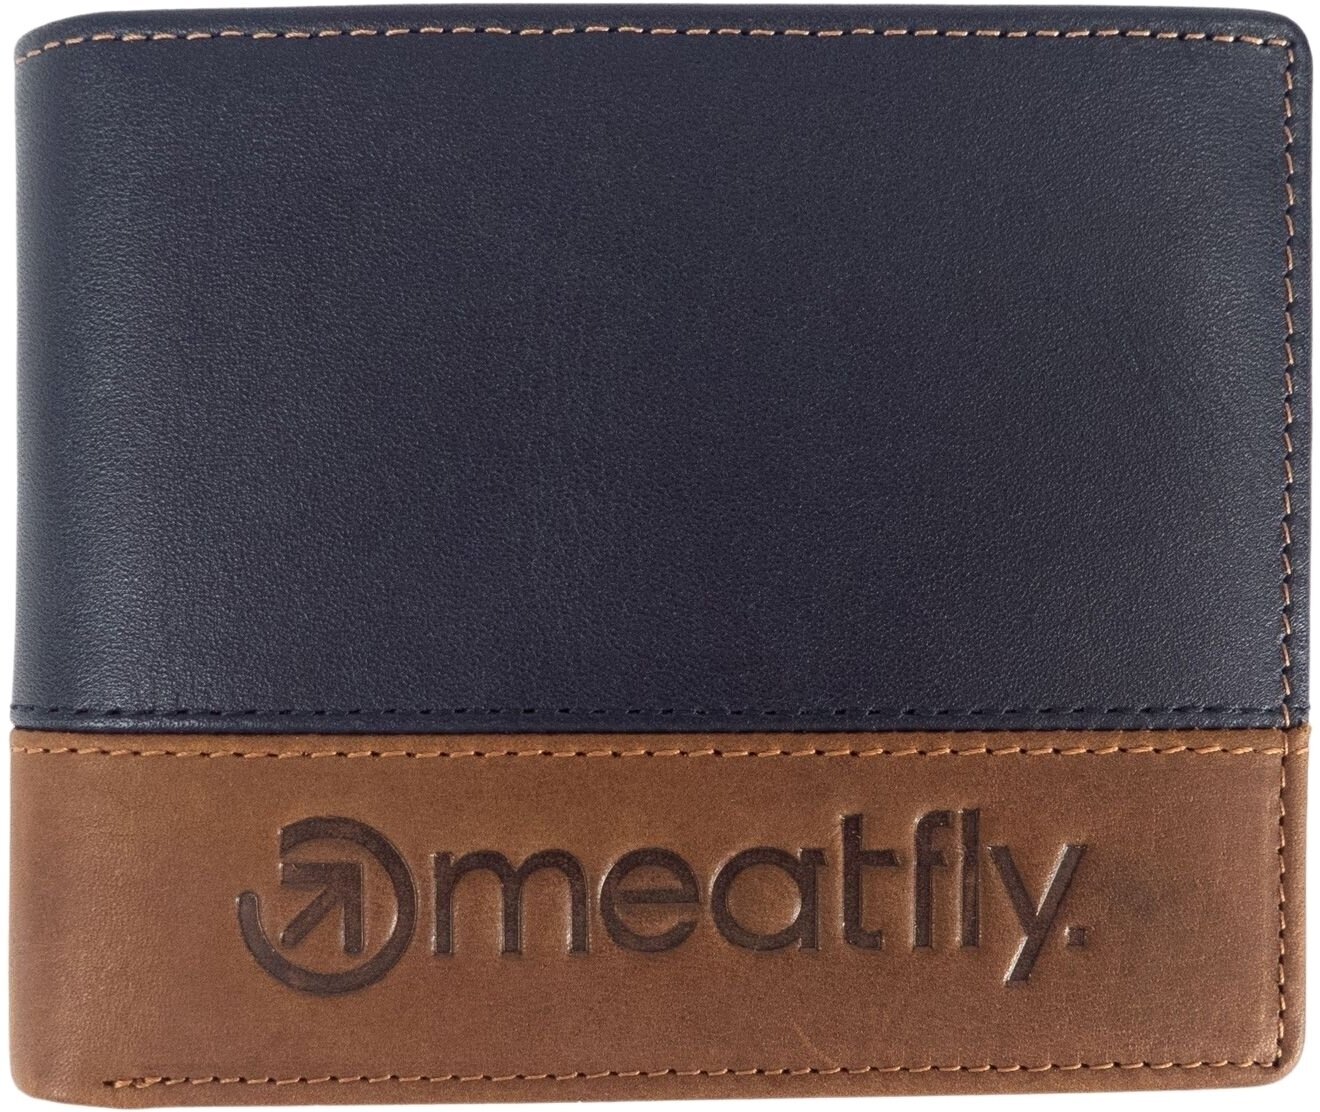 Portefeuille, sac bandoulière Meatfly Eddie Premium Leather Wallet Navy/Brown Portefeuille (CMS)